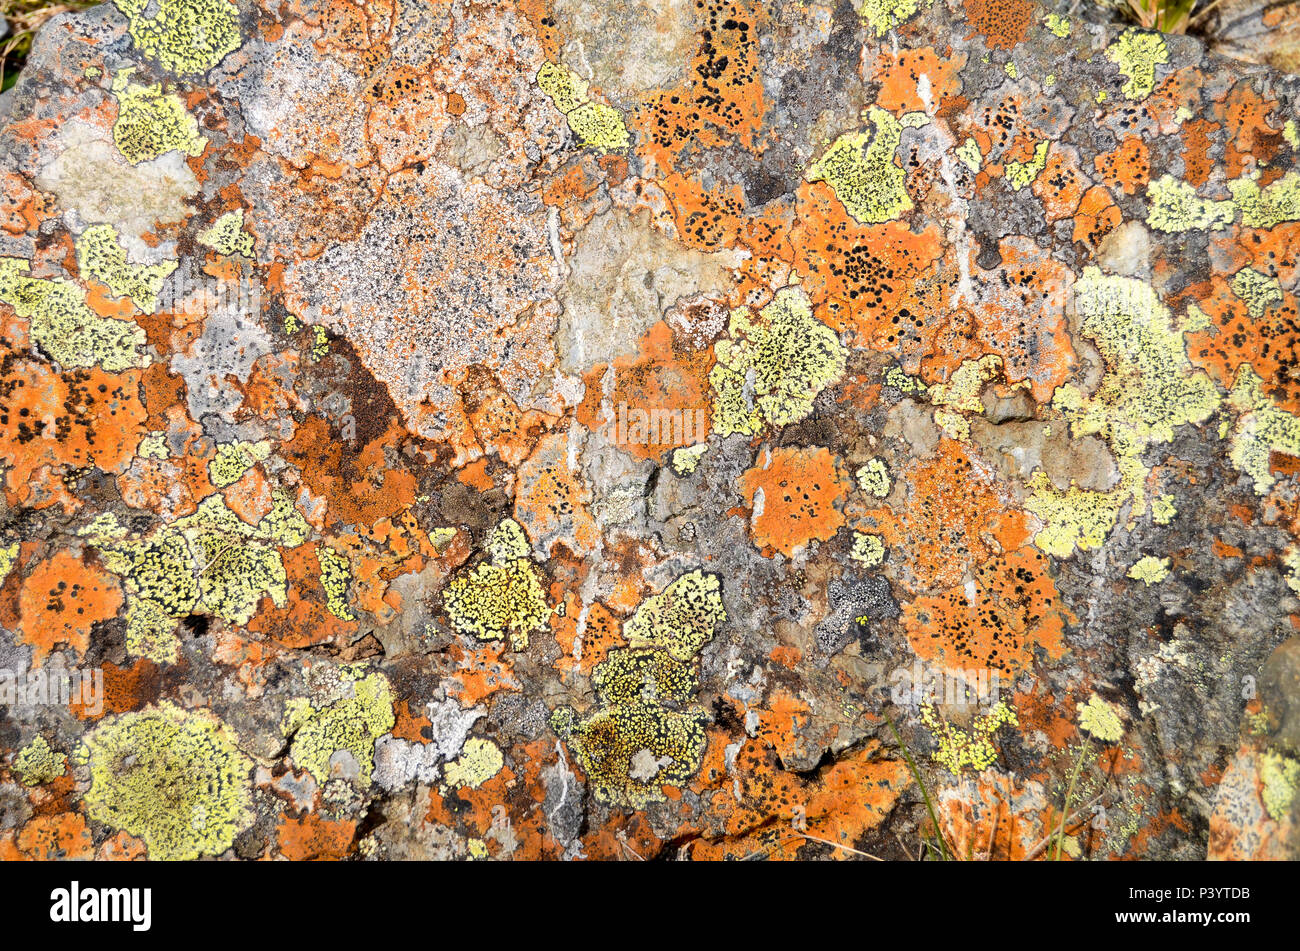 A crusty crustose lichen on a stone, Vatnajökull National Park, Iceland Stock Photo